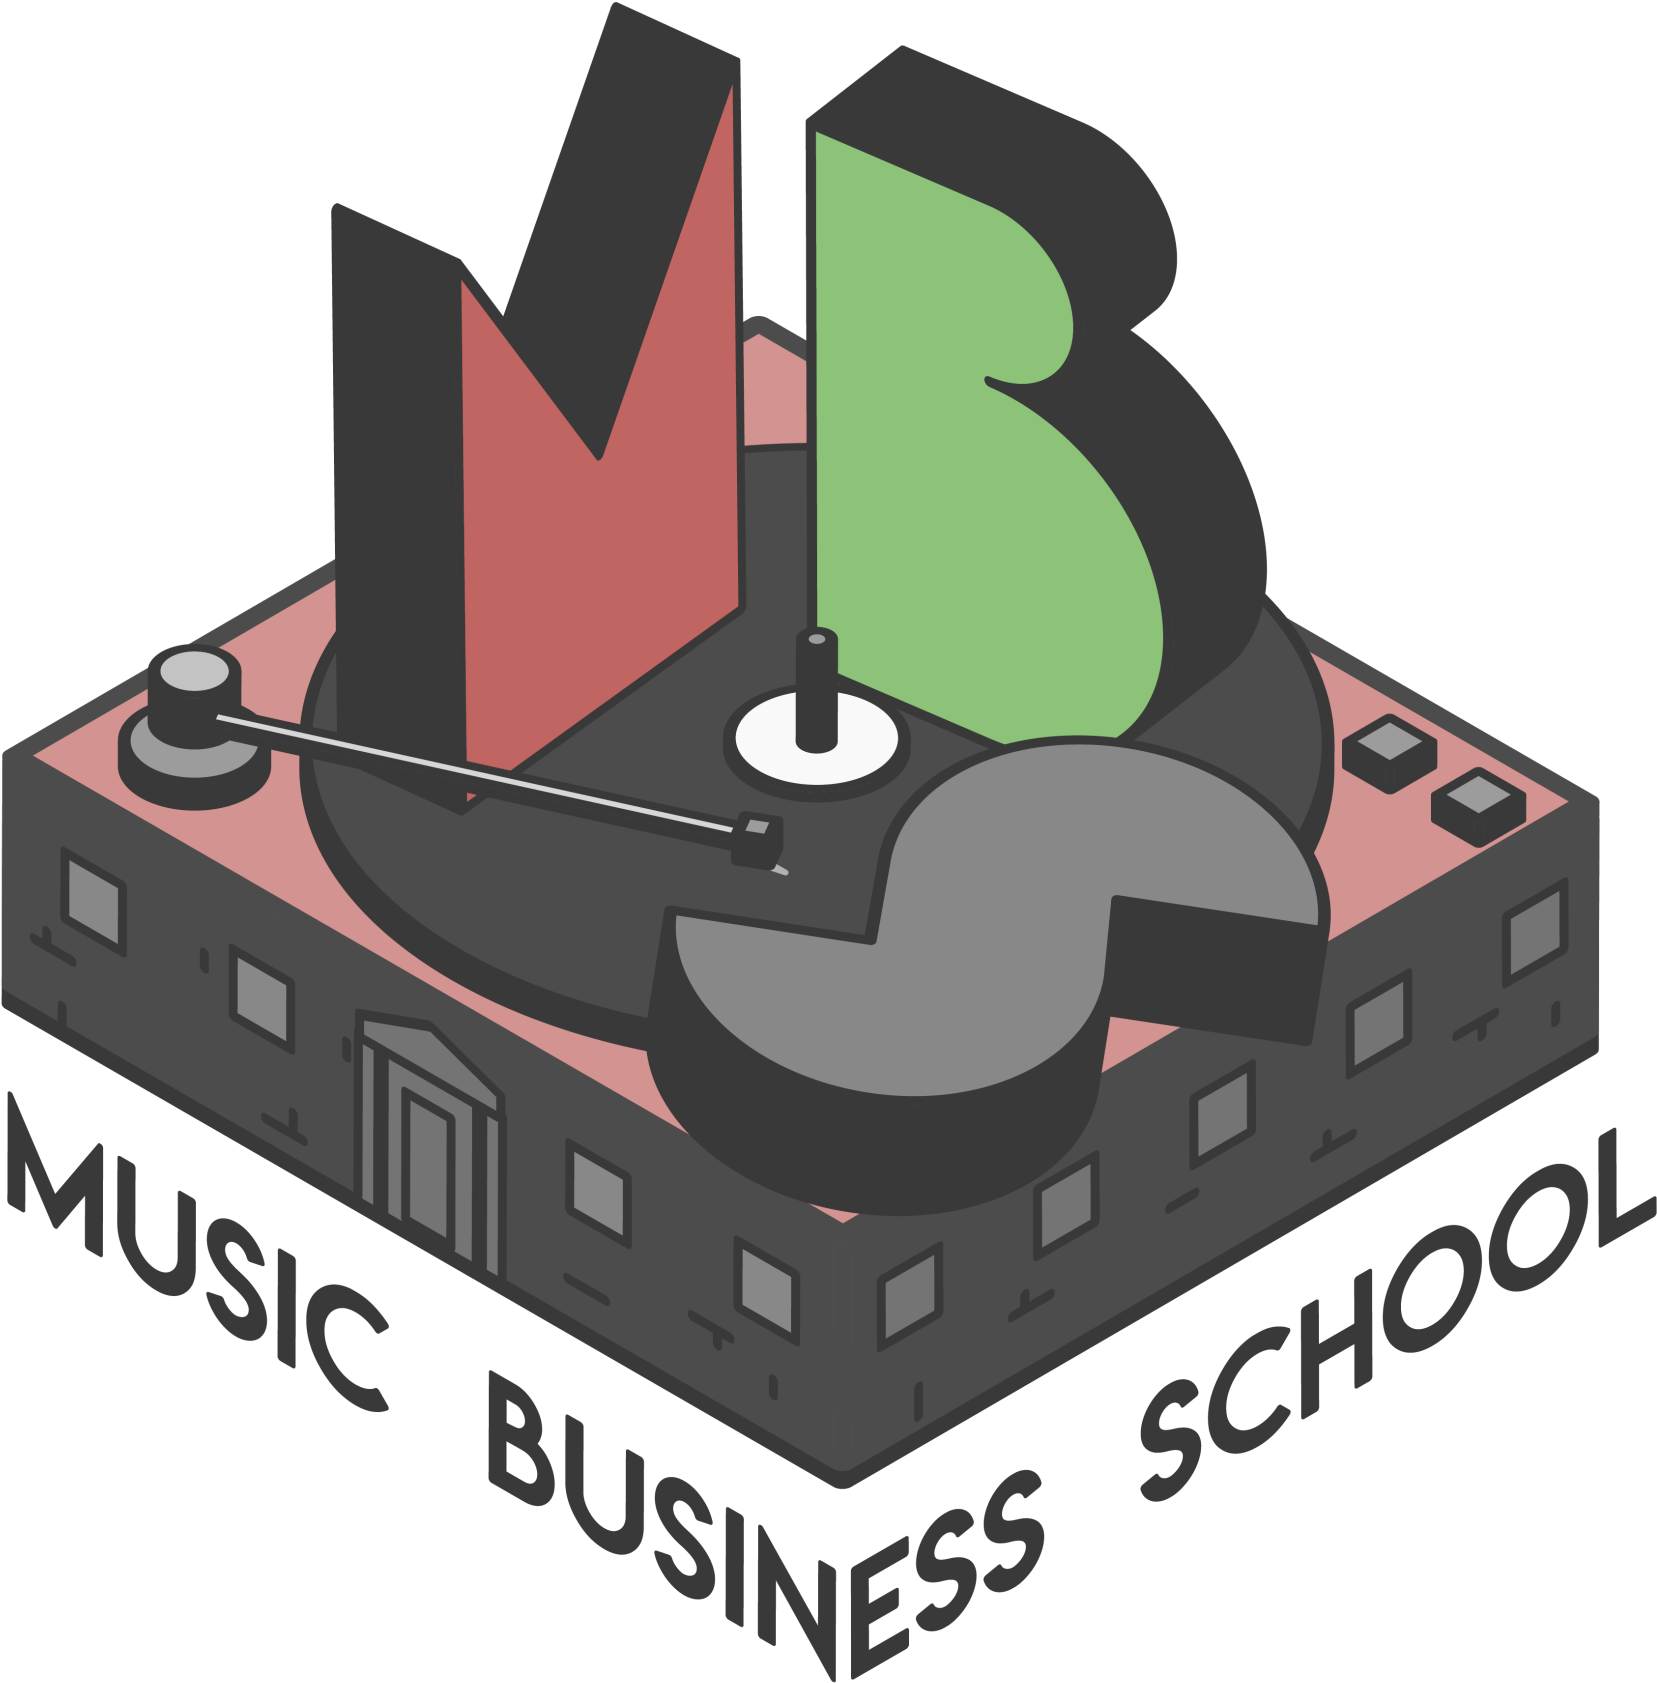 Back - Music Business School (2048x2048)